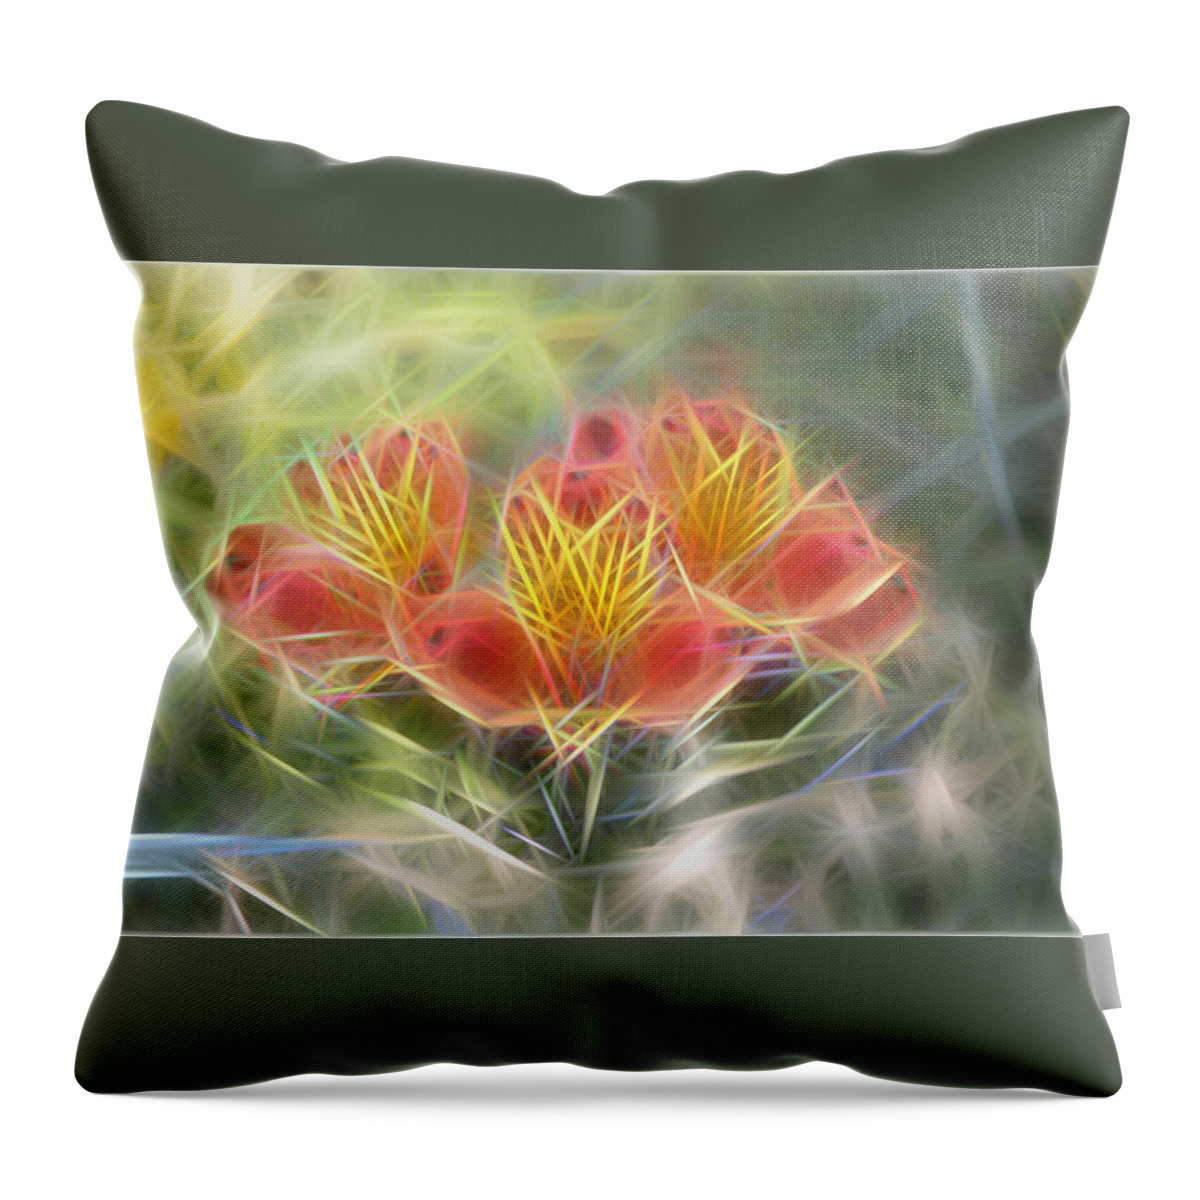 Flower Throw Pillow featuring the digital art Flower Streaks by Carol Crisafi